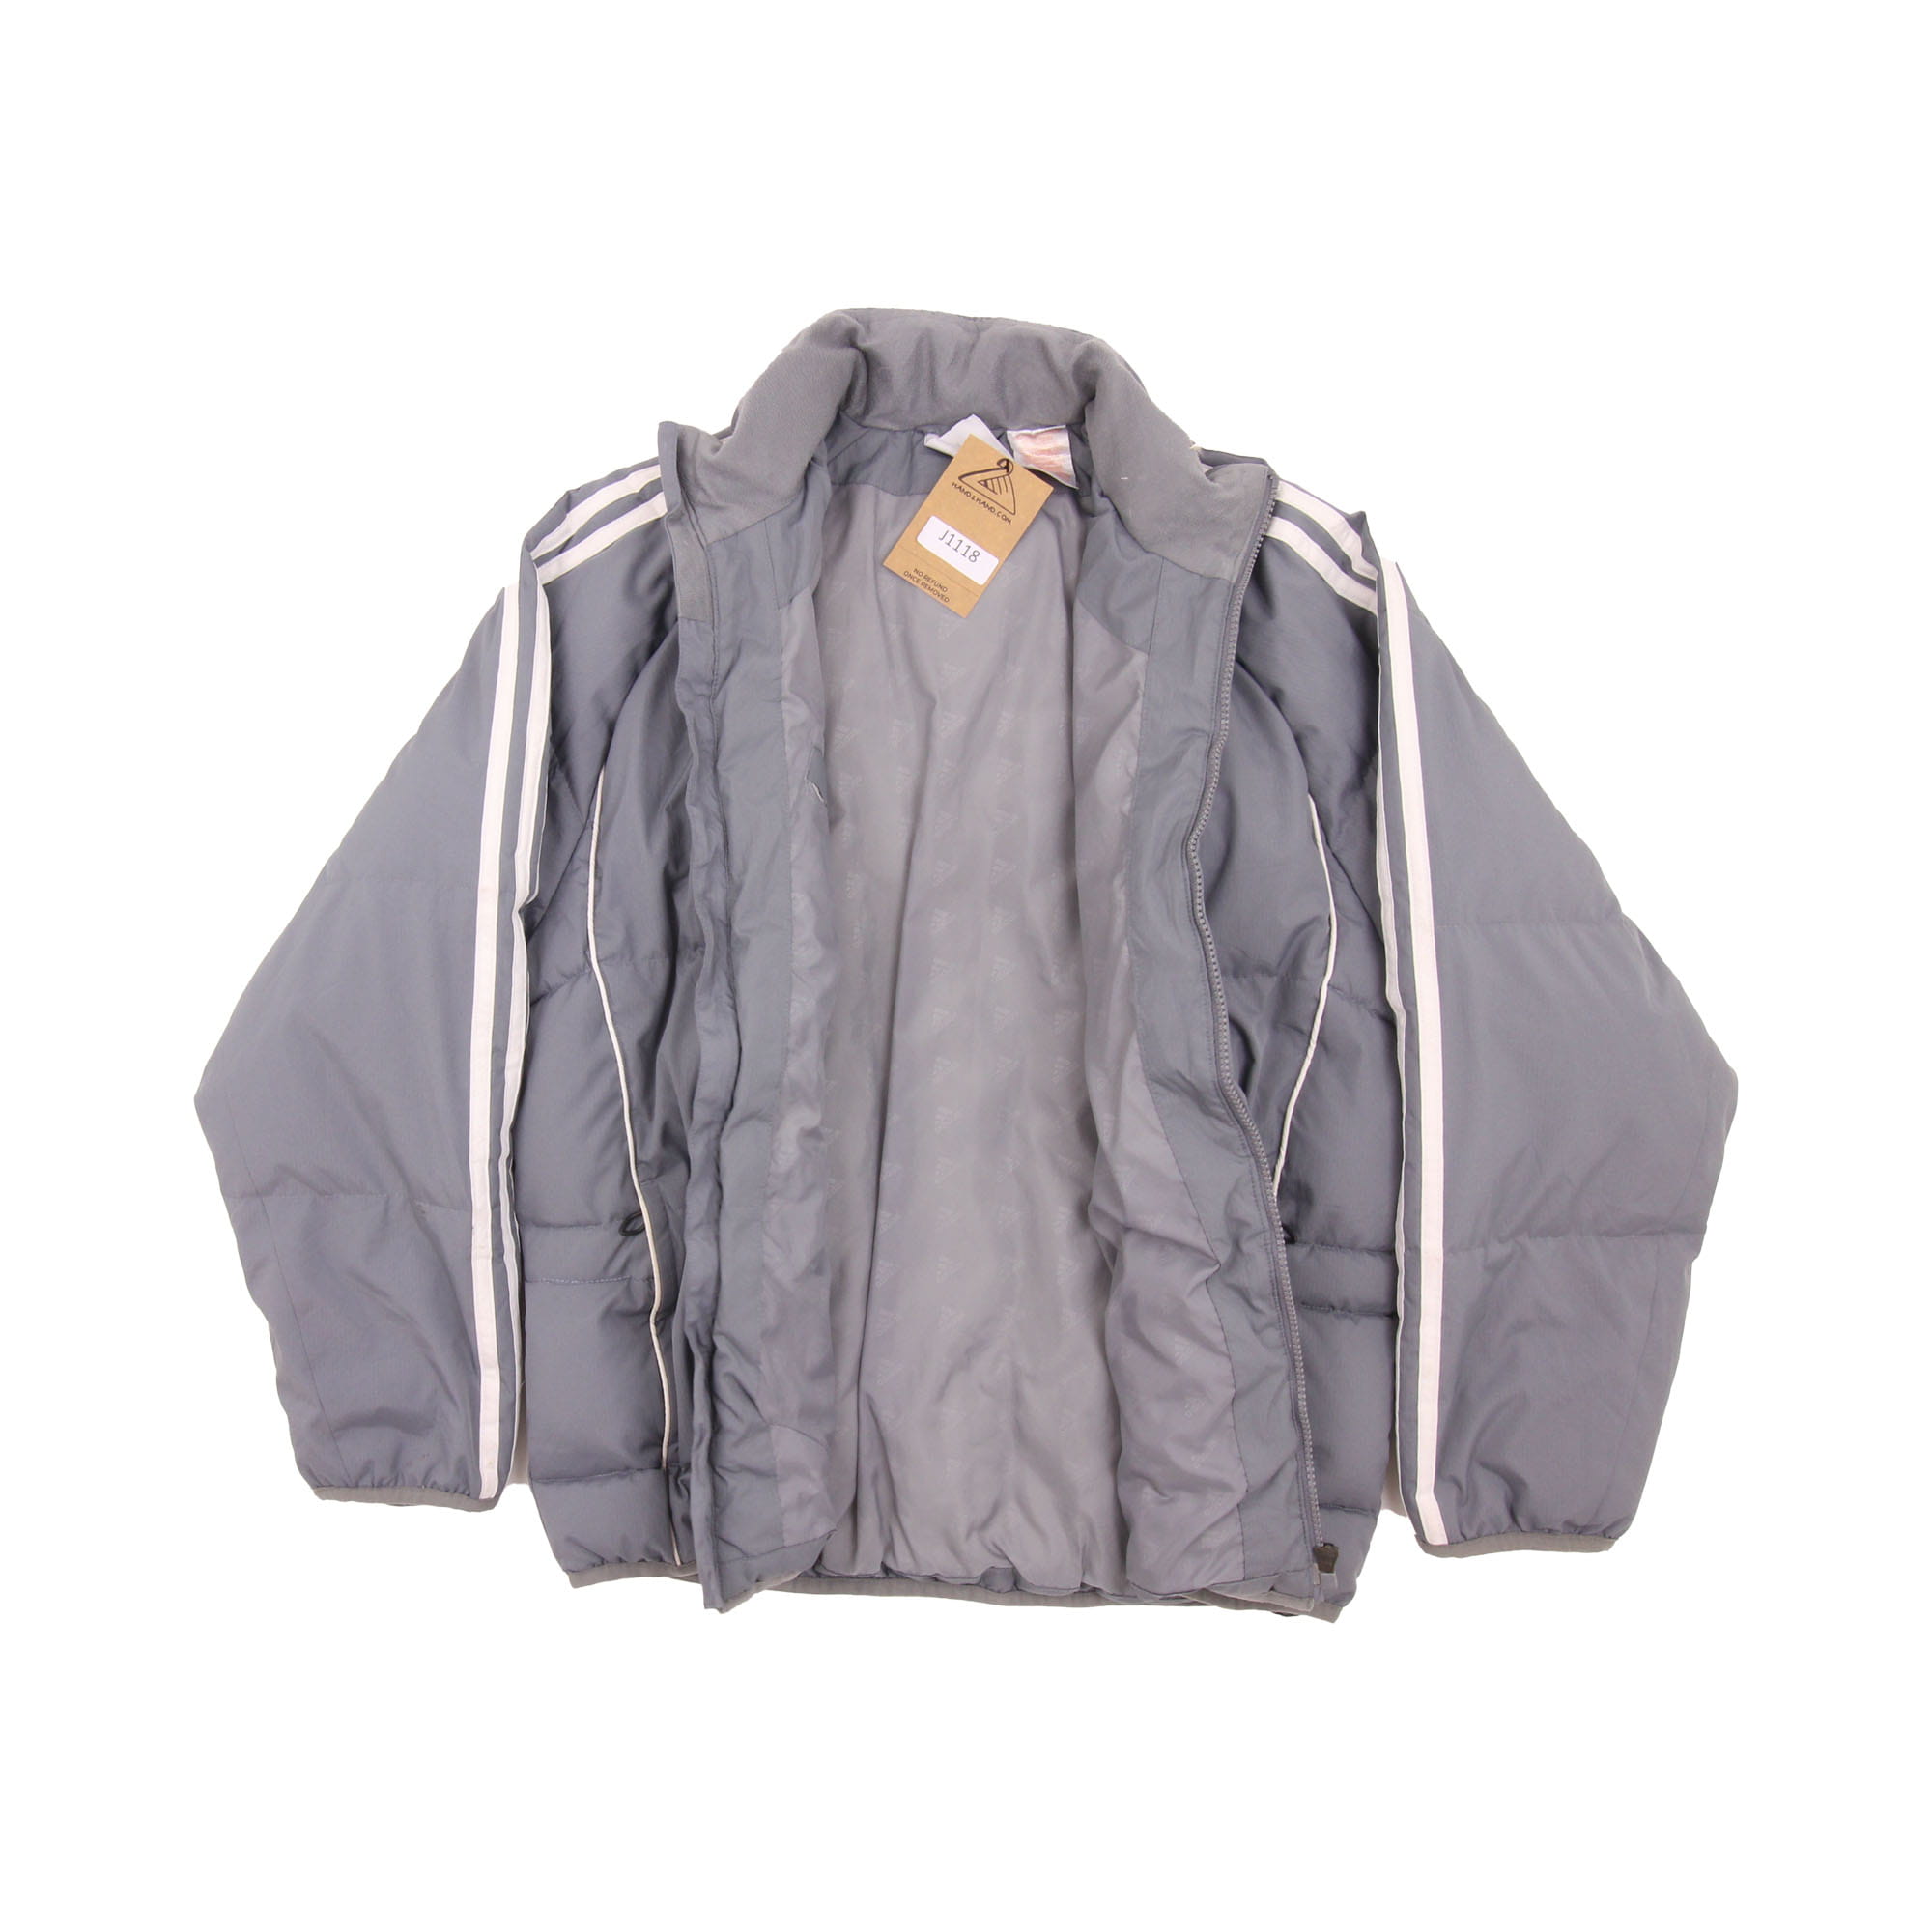 Adidas Puffer Jacket Grey -  S/M